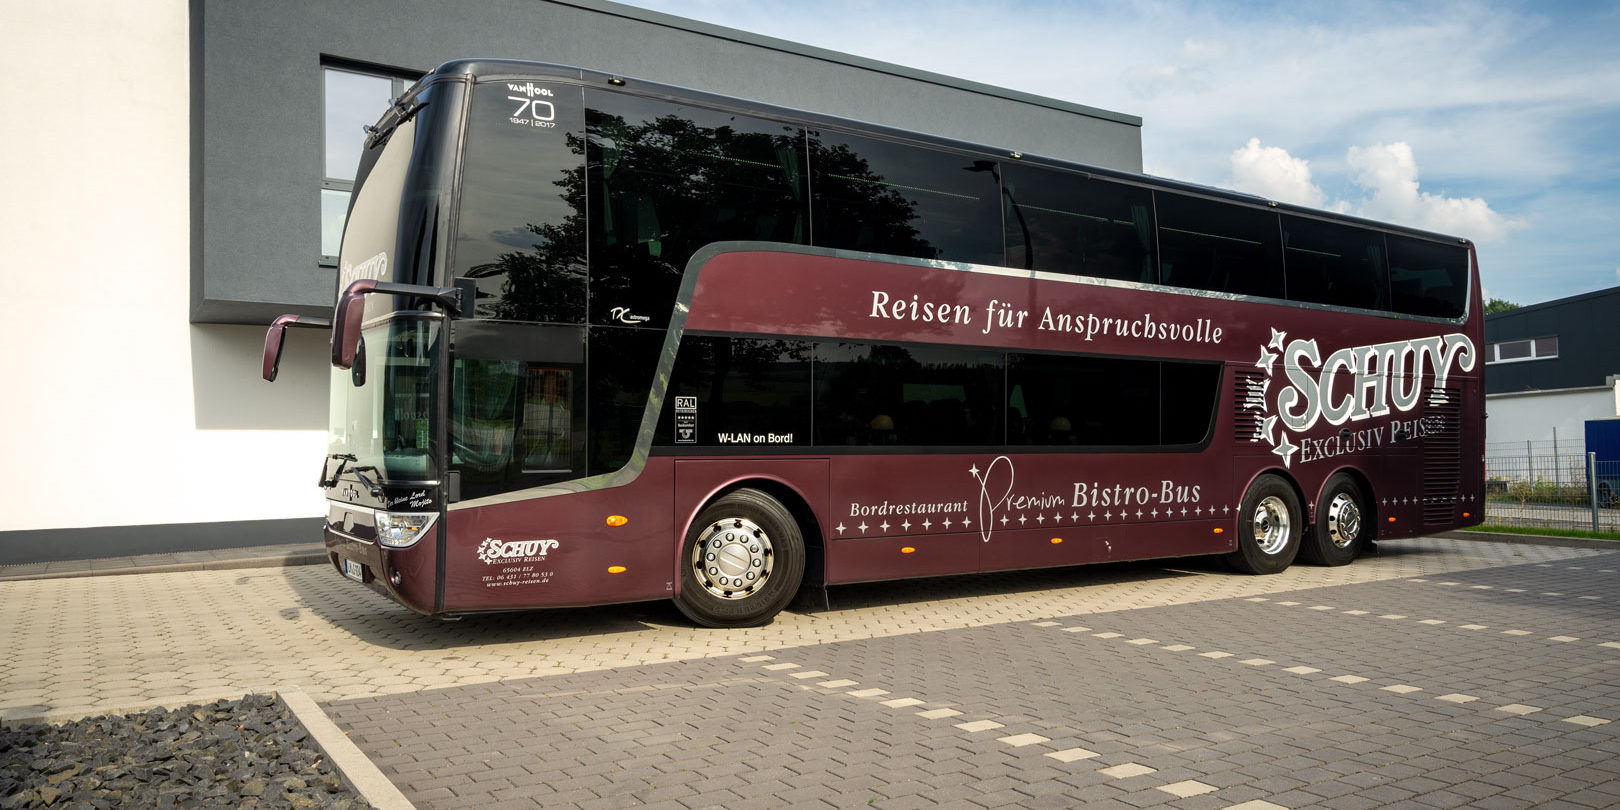 Schuy Exclusiv Reisen_Bistro-Bus_5 Premium Bistro Bus Van Hool